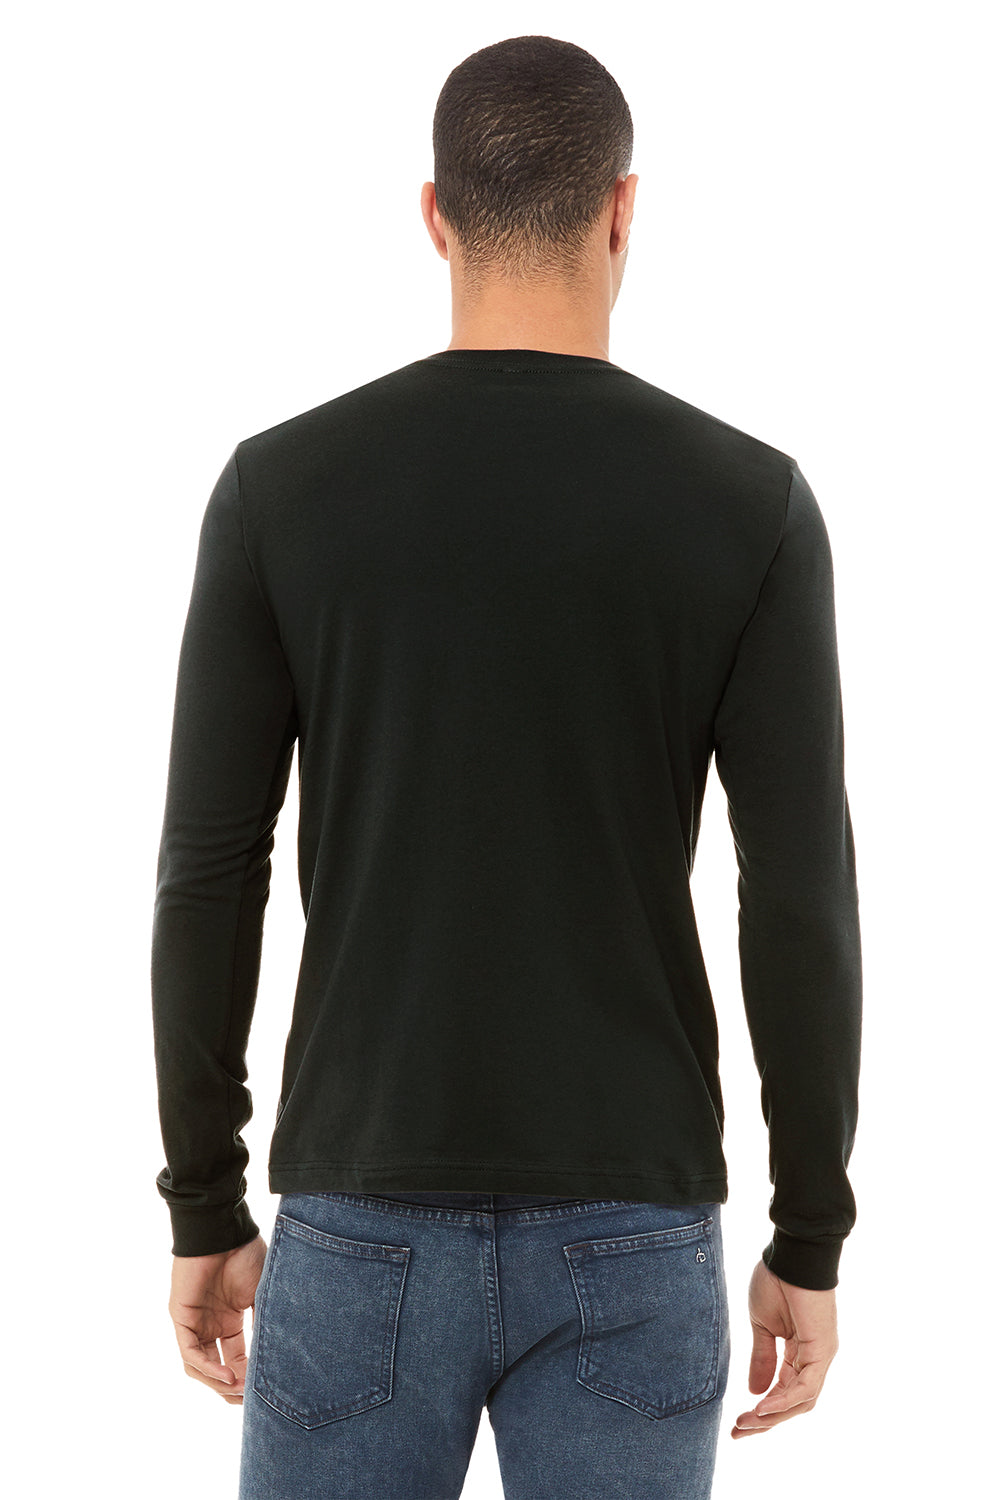 Bella + Canvas BC3501/3501 Mens Jersey Long Sleeve Crewneck T-Shirt Black Model Back